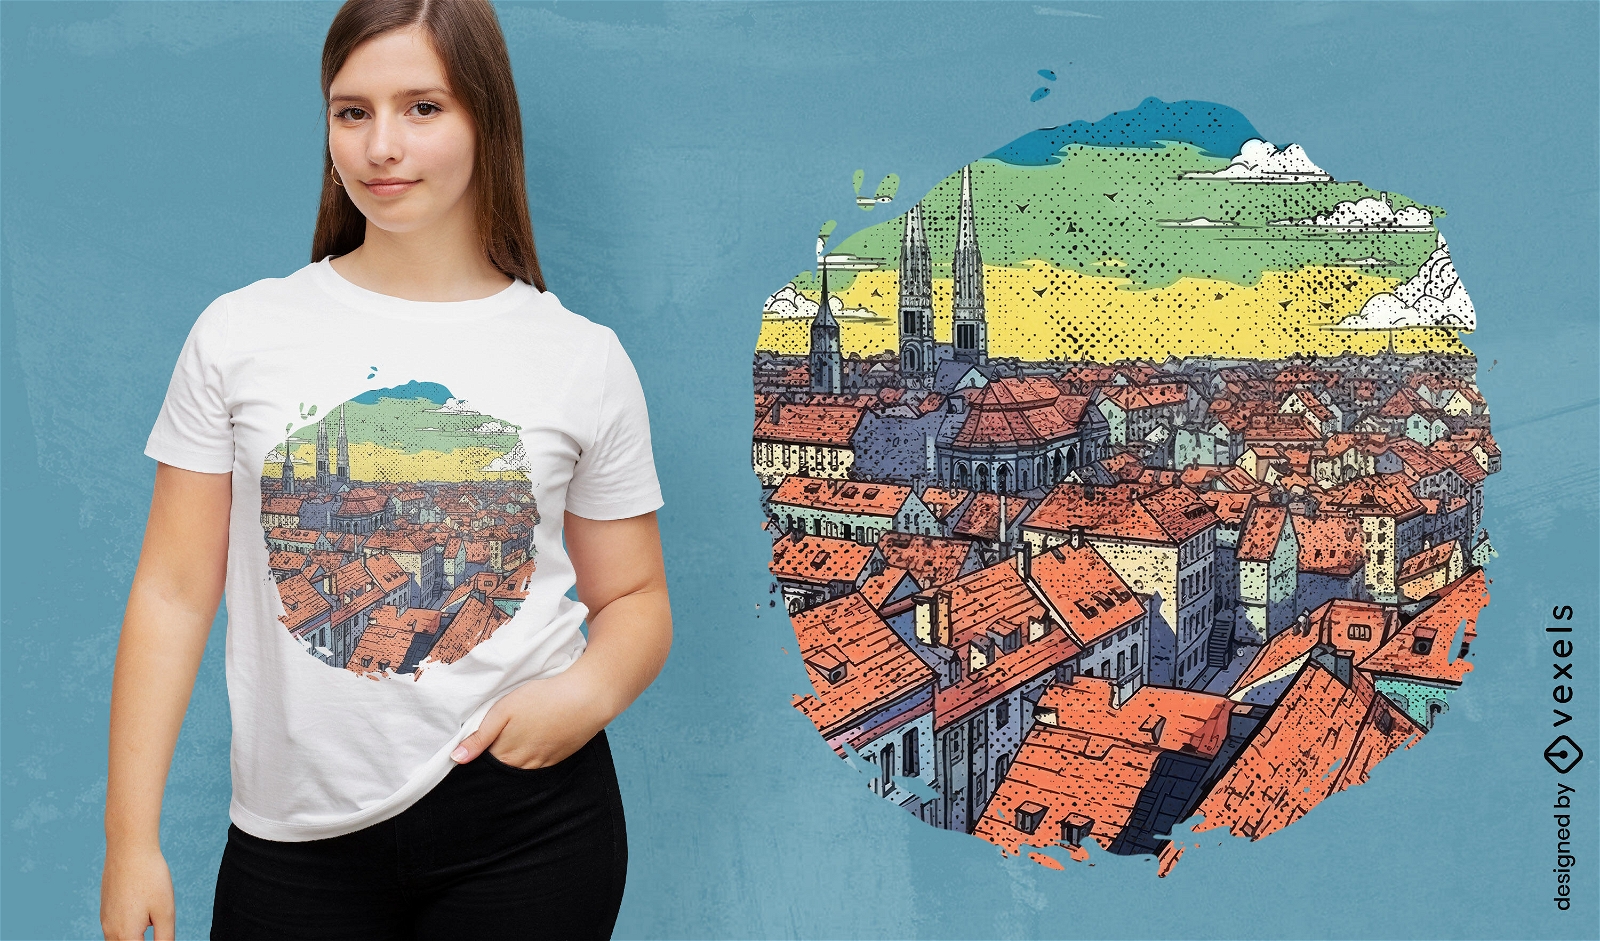 Croatia city illustration t-shirt design